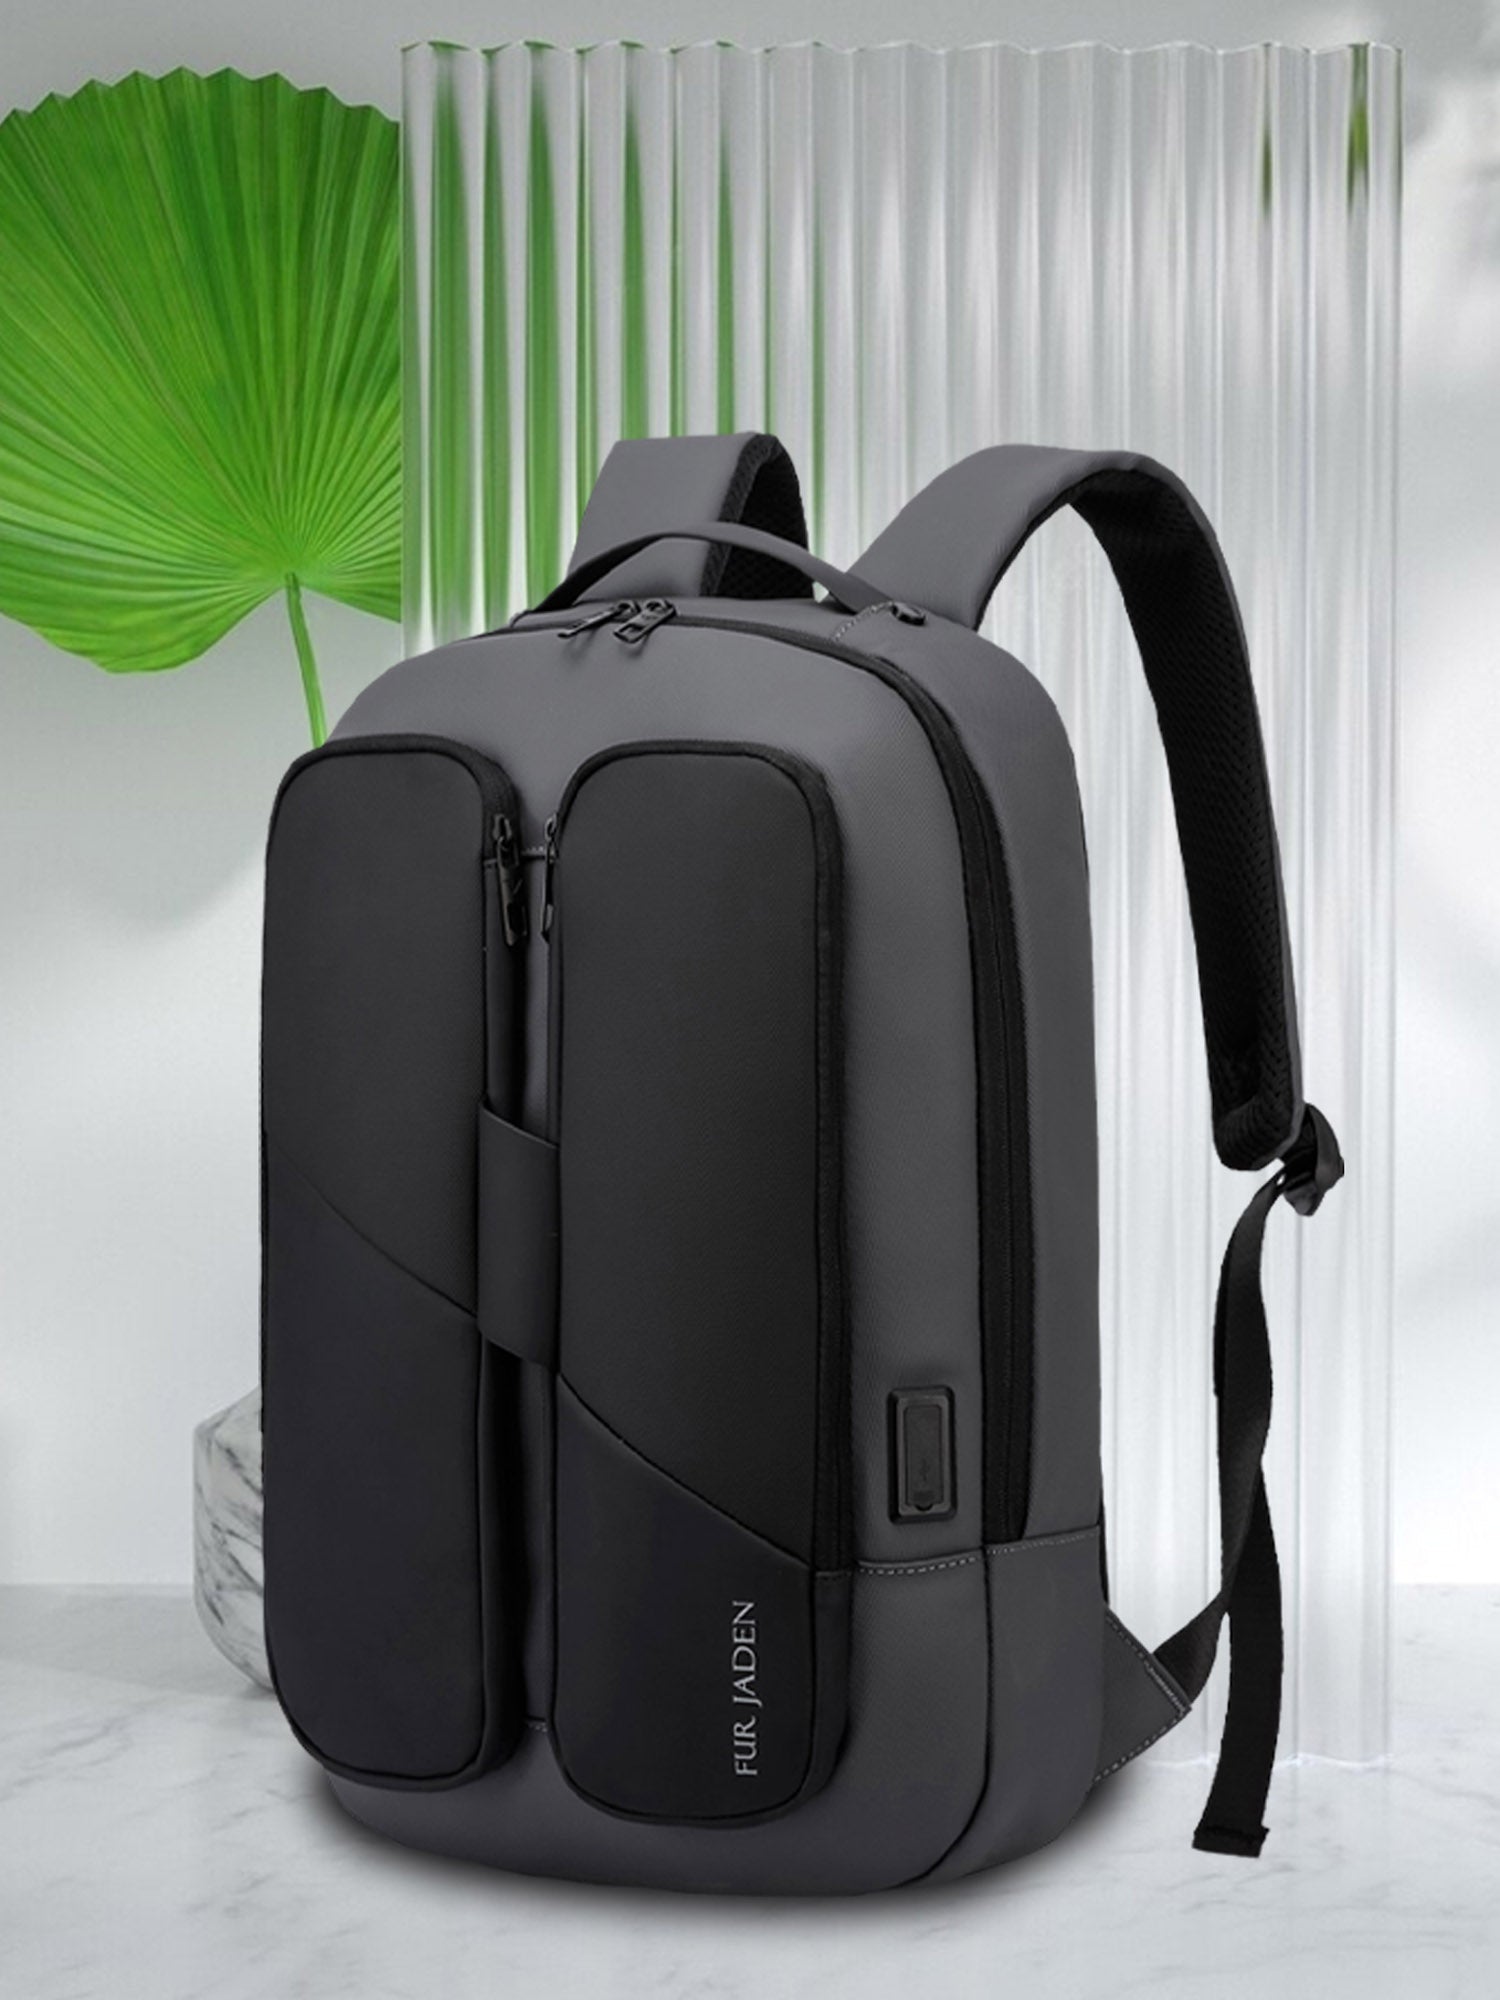 Fur Jaden Anti Theft Backpack 156 Inch Laptop Bag with USB Charging Port  Black